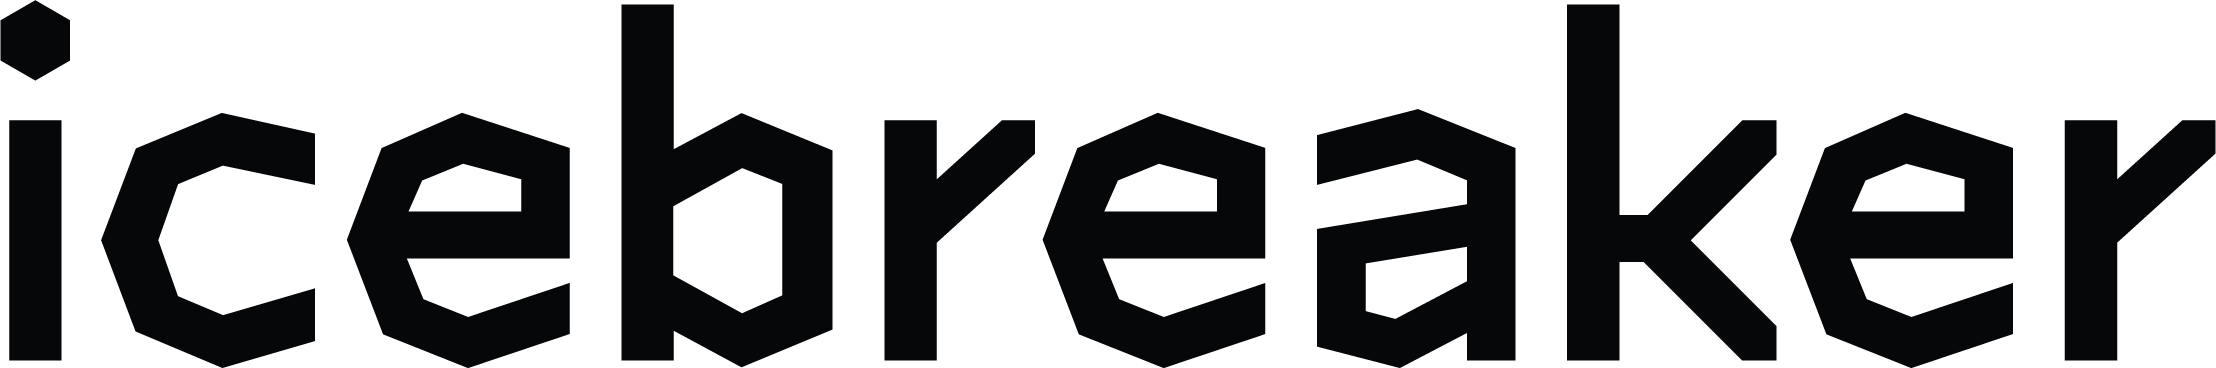 Icebreaker logo black